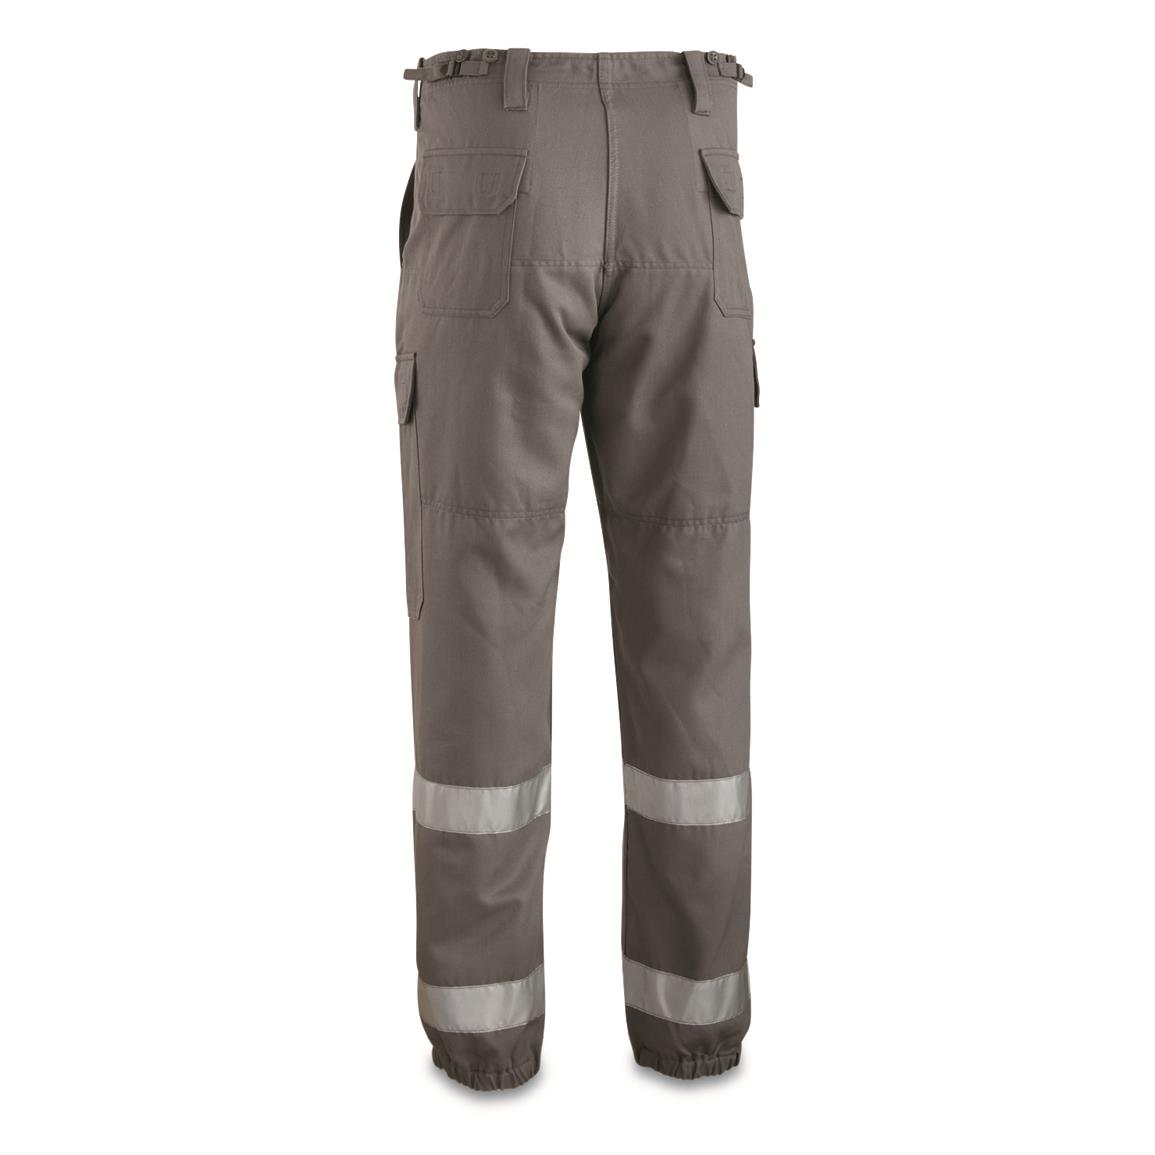 Guide Gear Men's Outdoor Cotton Cargo Pants - 677832, Jeans & Pants at  Sportsman's Guide